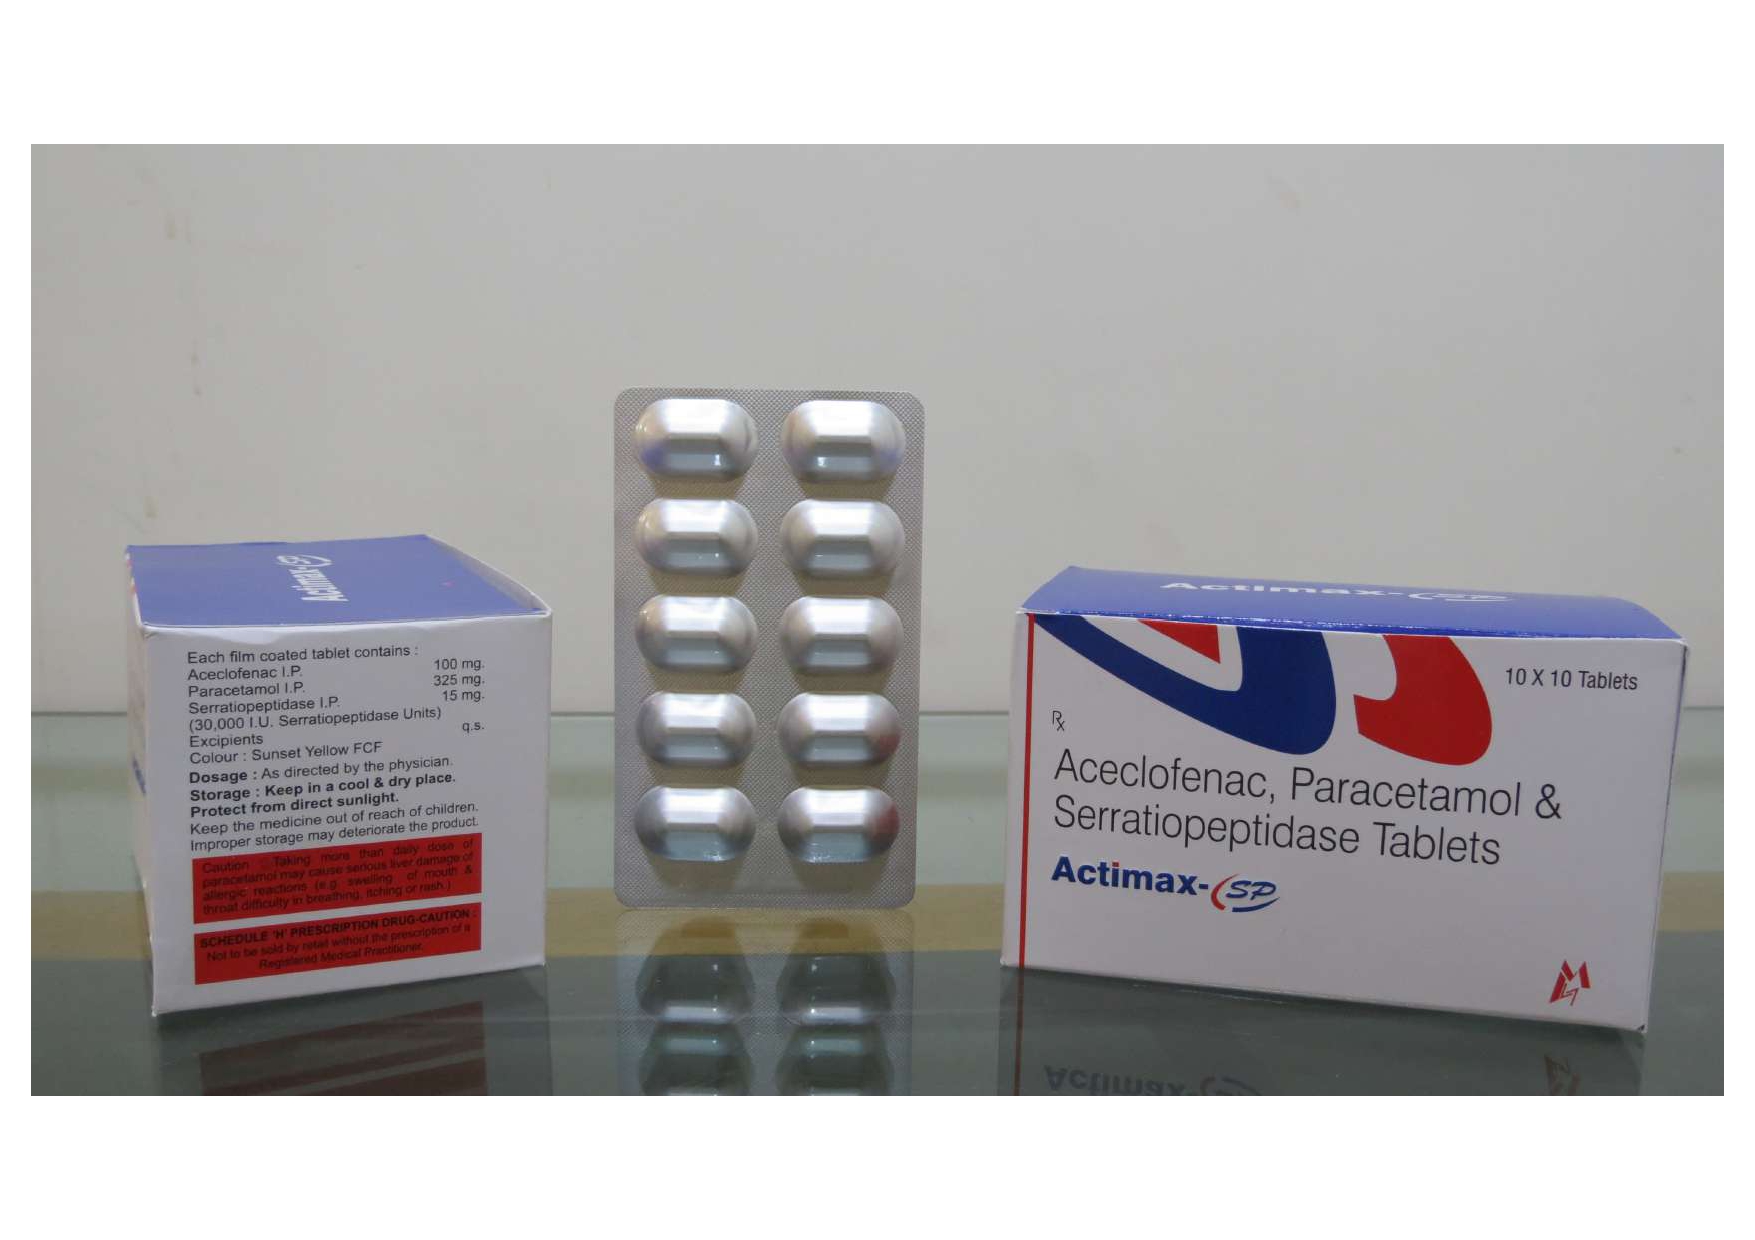 aceclofenac 100mg+paracetamol 325mg
+serratiopeptidase 15mg tablets